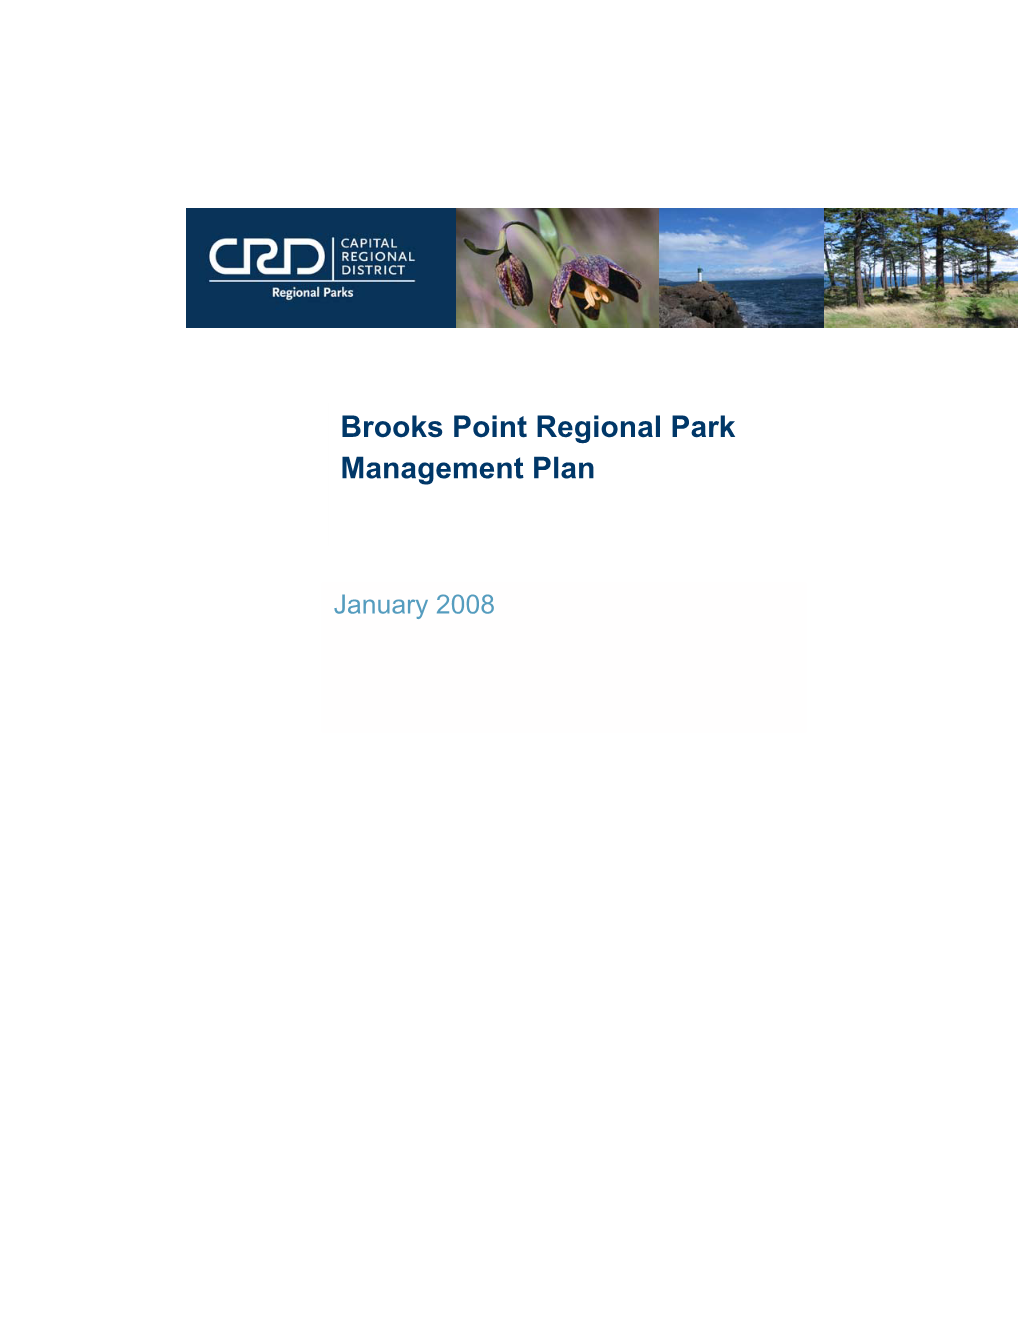 Brooks Point Regional Park Management Plan